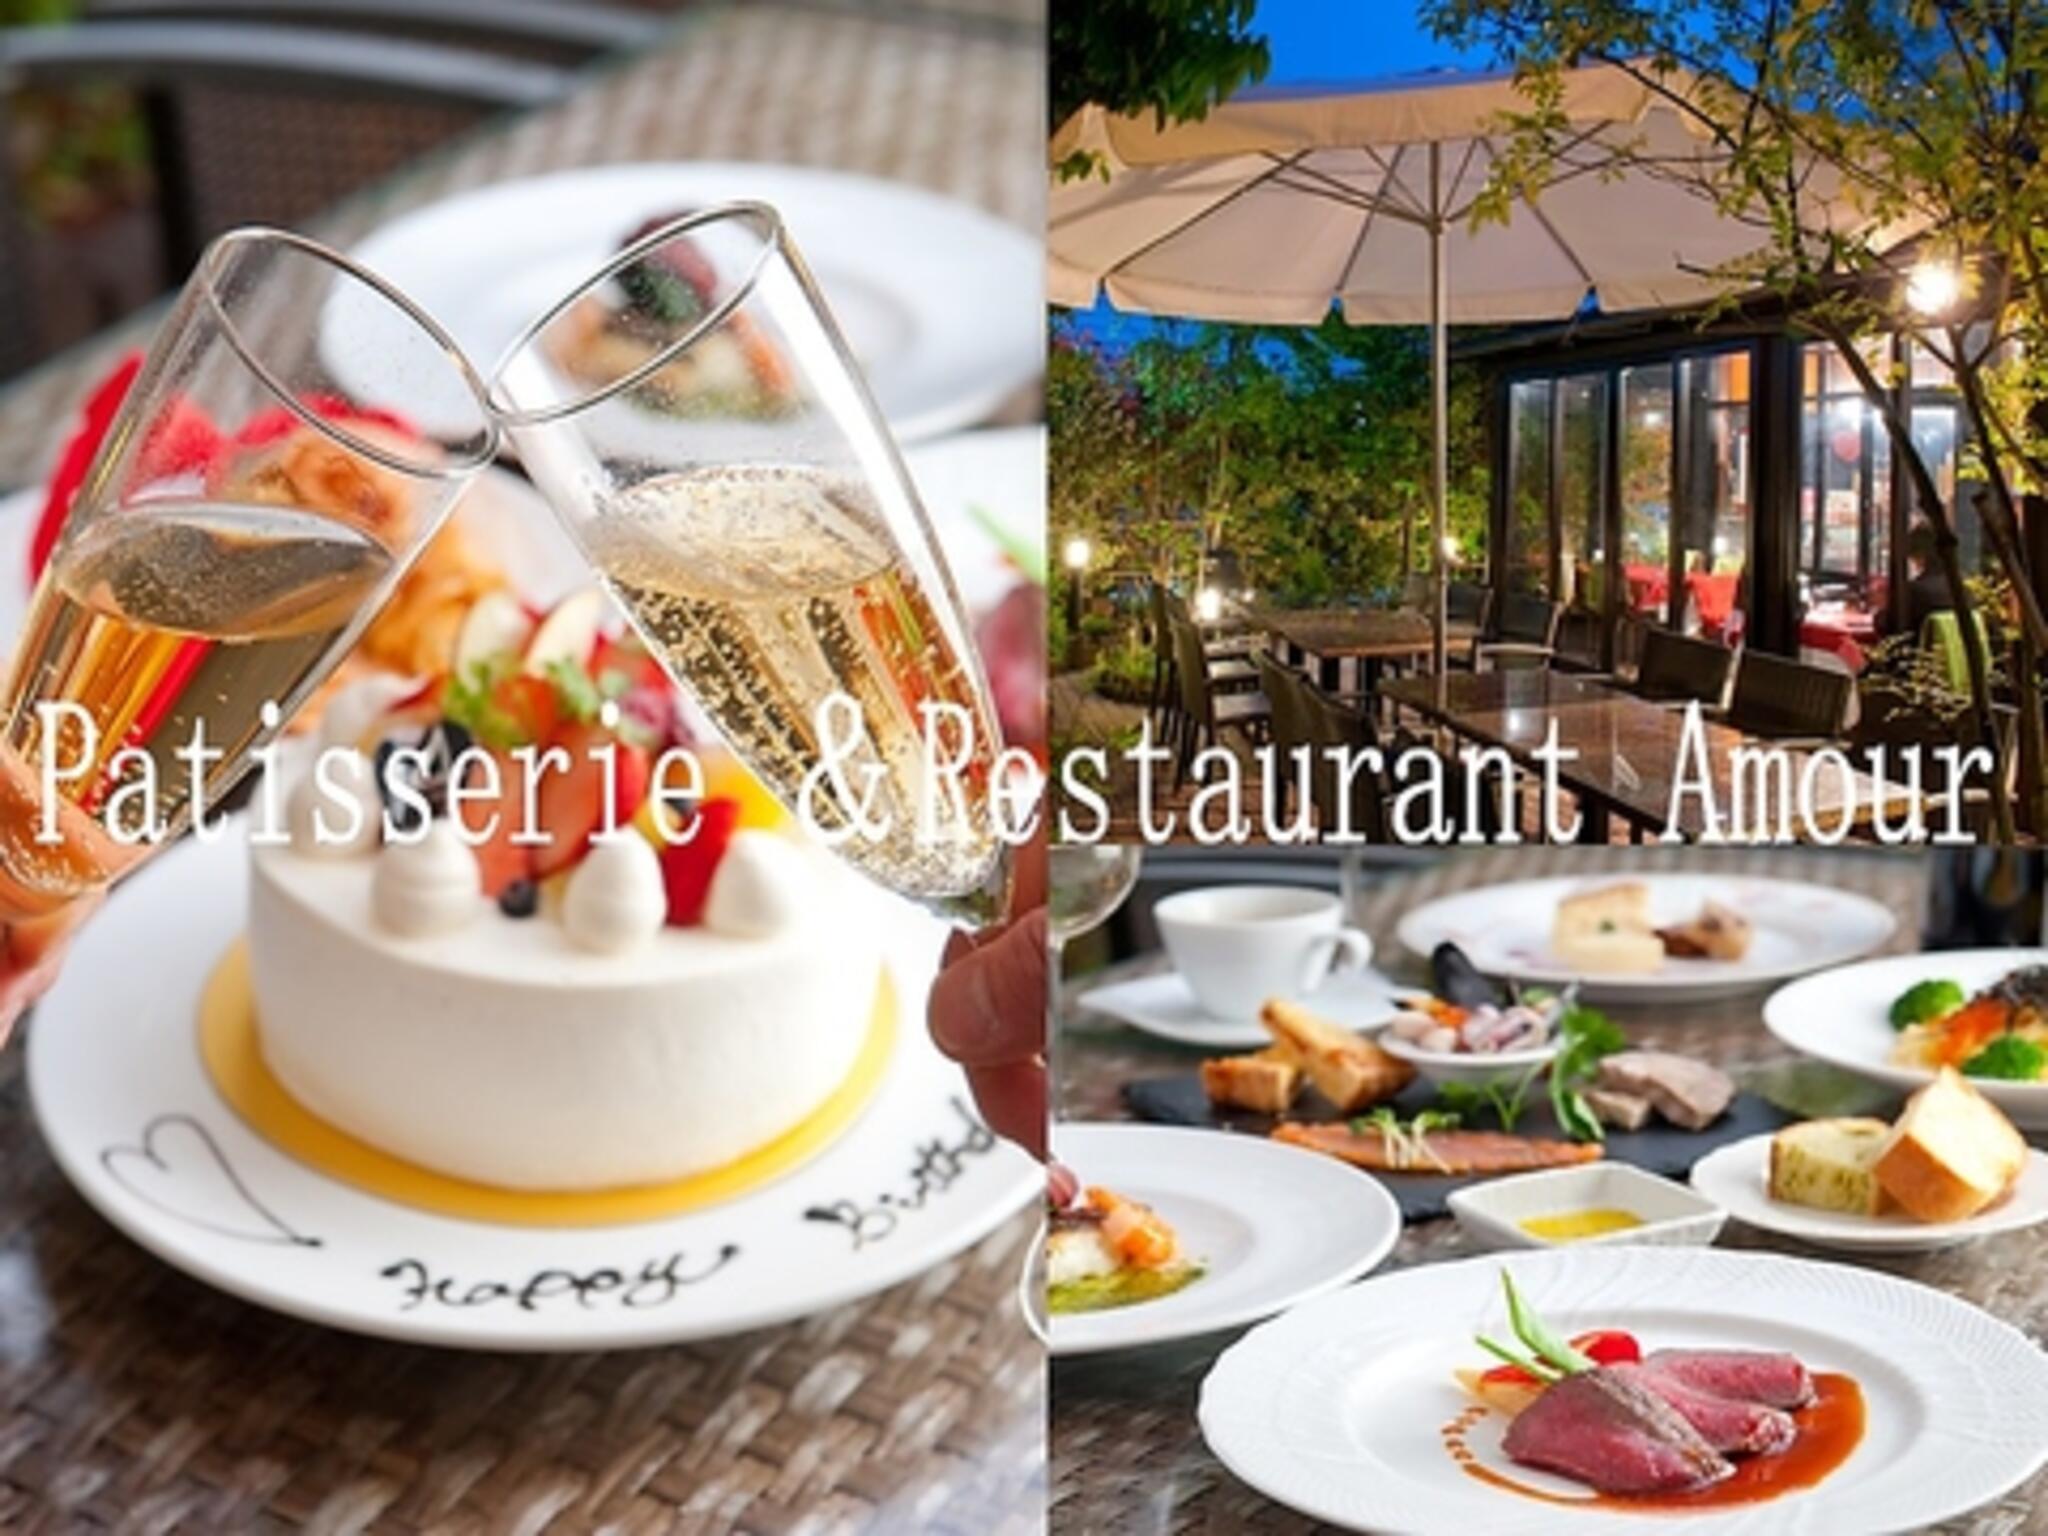 Patisserie & Restaurant Amourの代表写真3